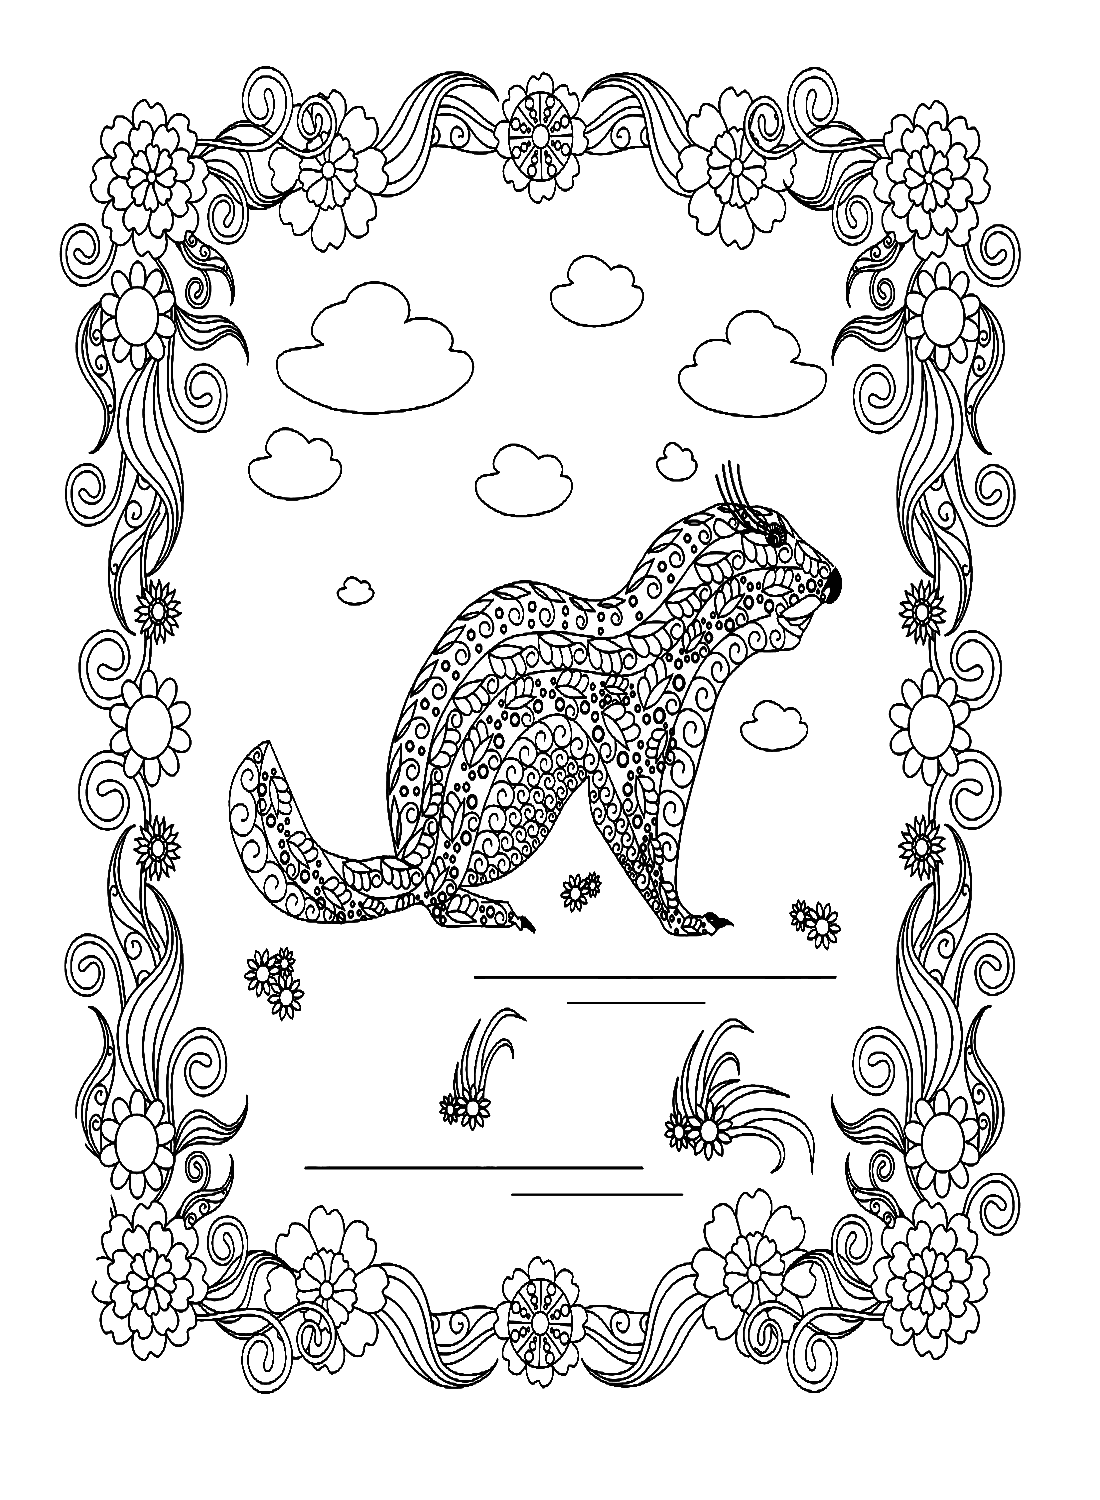 Marmotta in stile Zentangle di Marmot